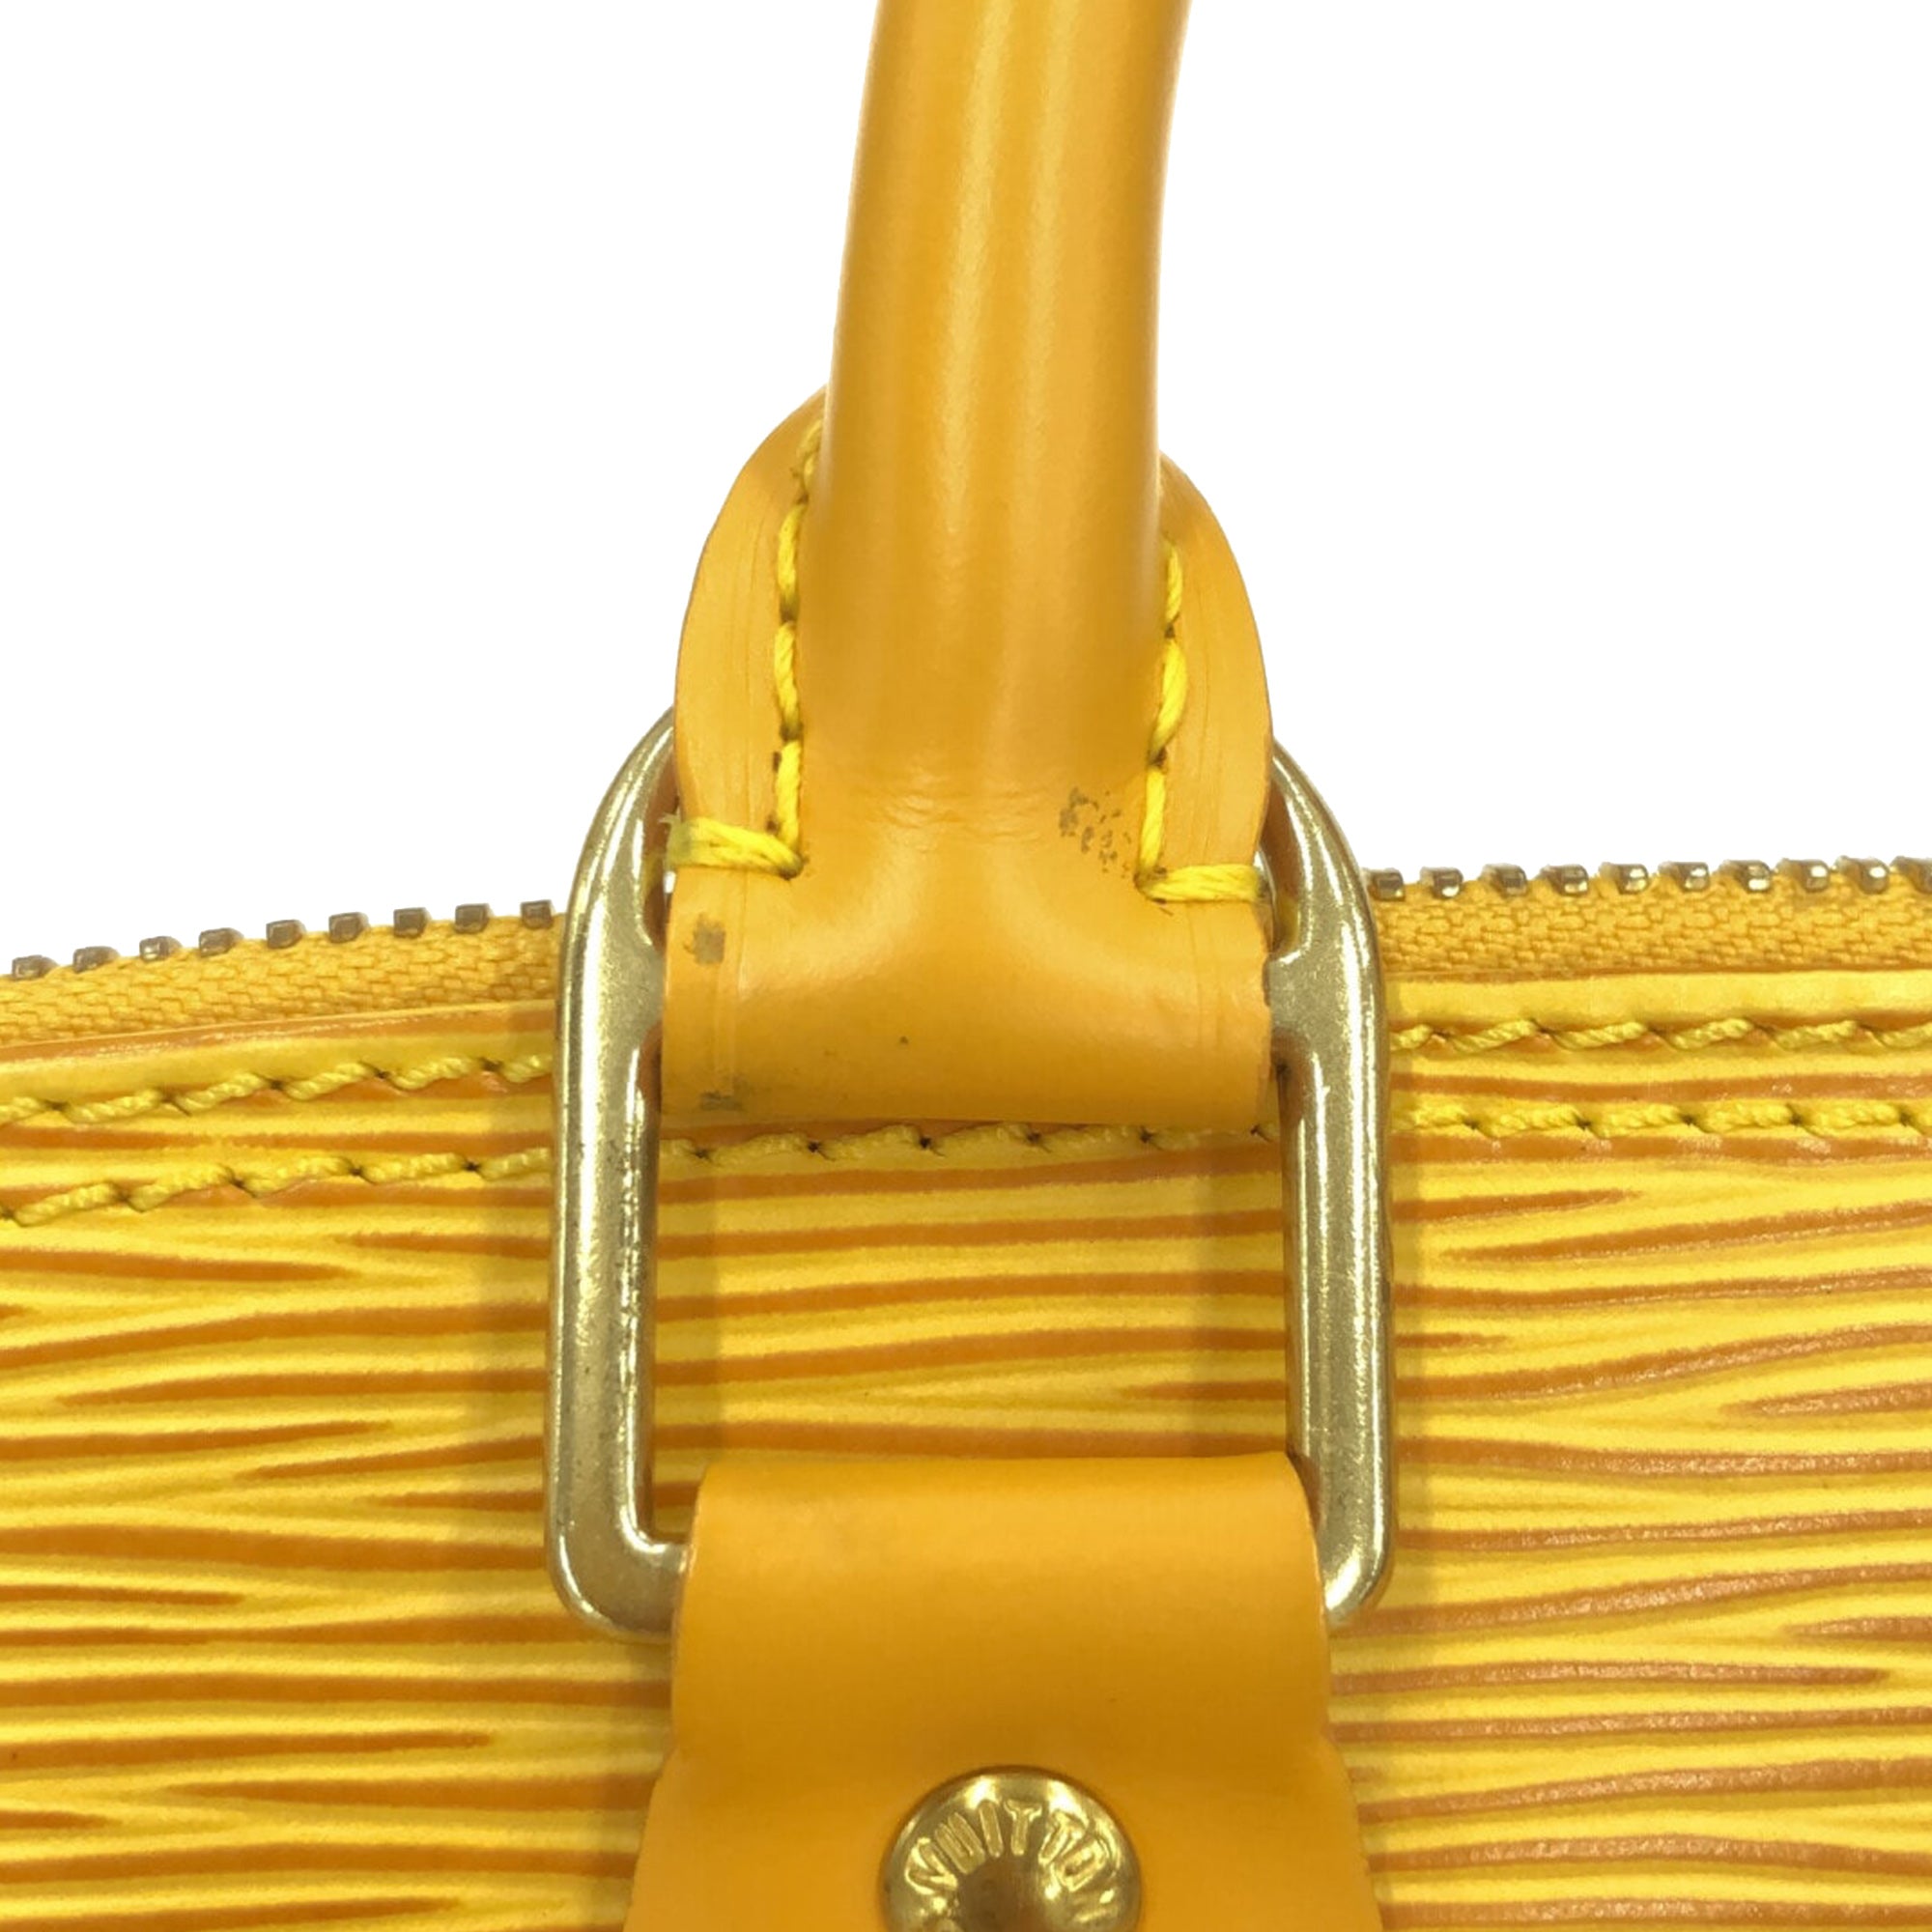 LOUIS VUITTON Alma PM Satchel Bag with Removable Shoulder Strap Yellow Epi